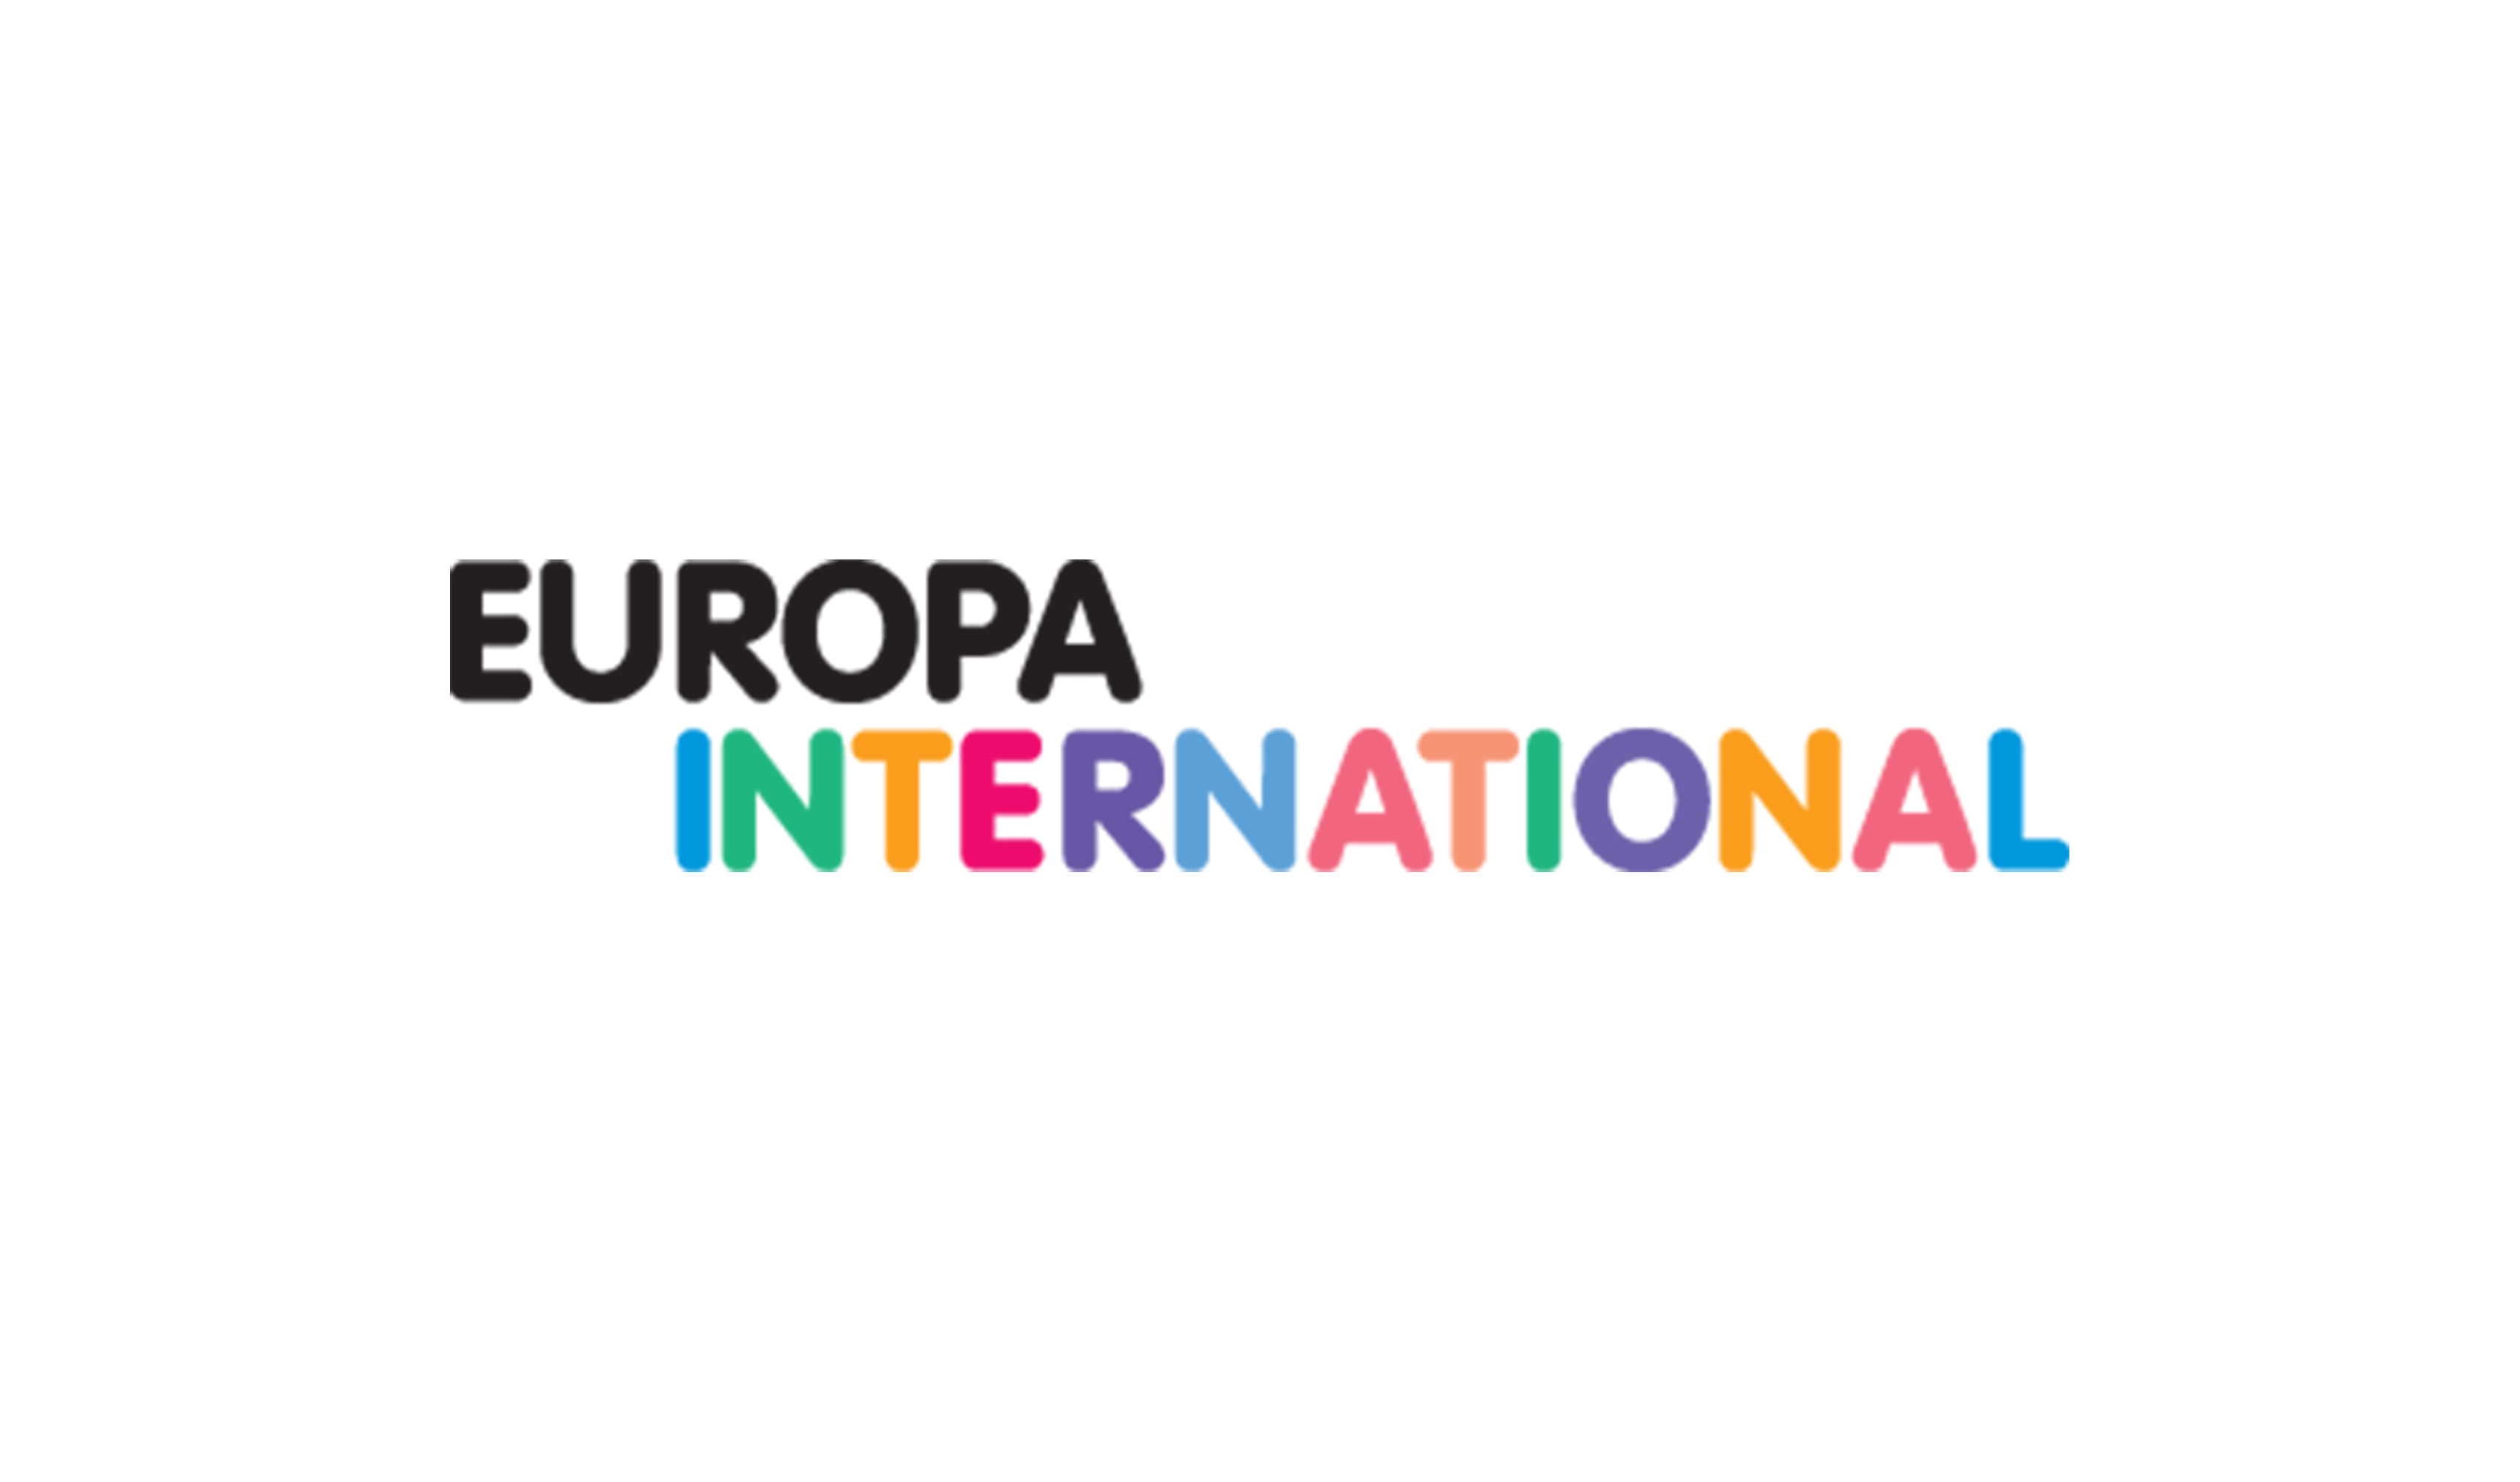 EUROPA INTERNATIONAL